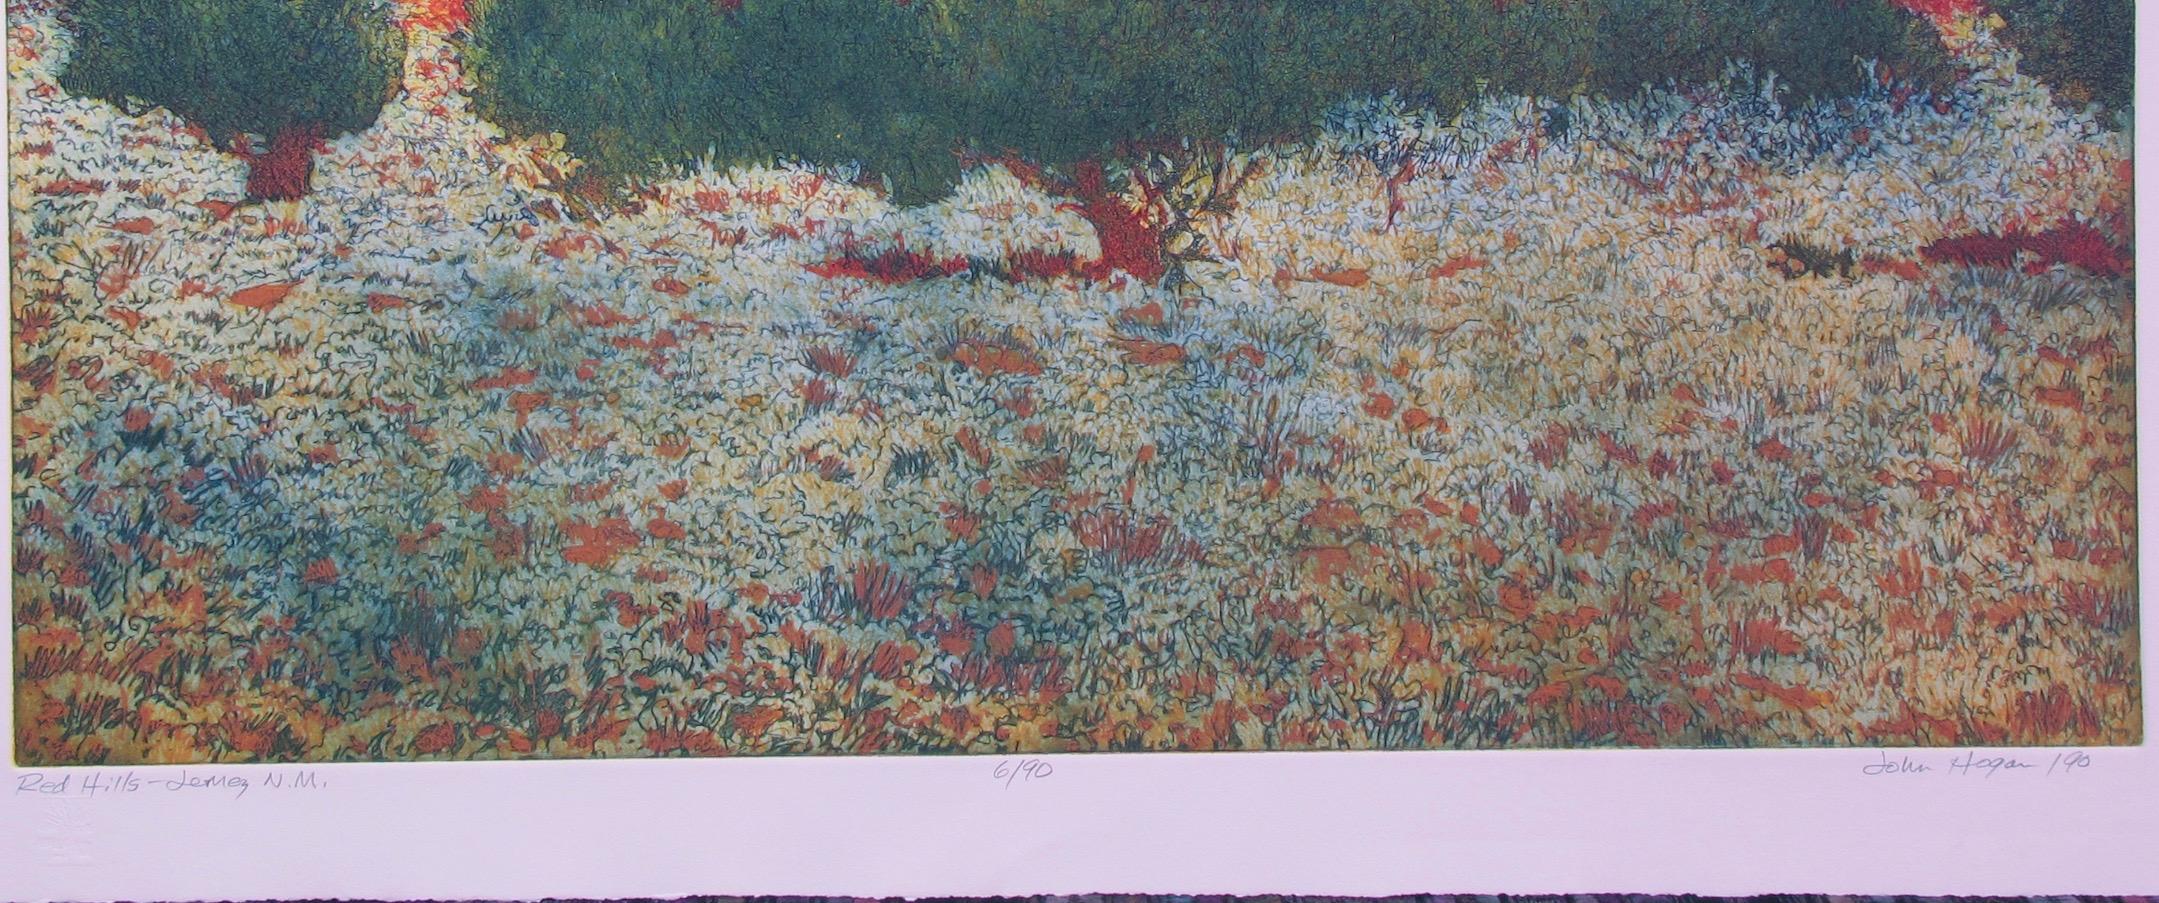 Red Hills, Jemez, NM - Print by John Hogan